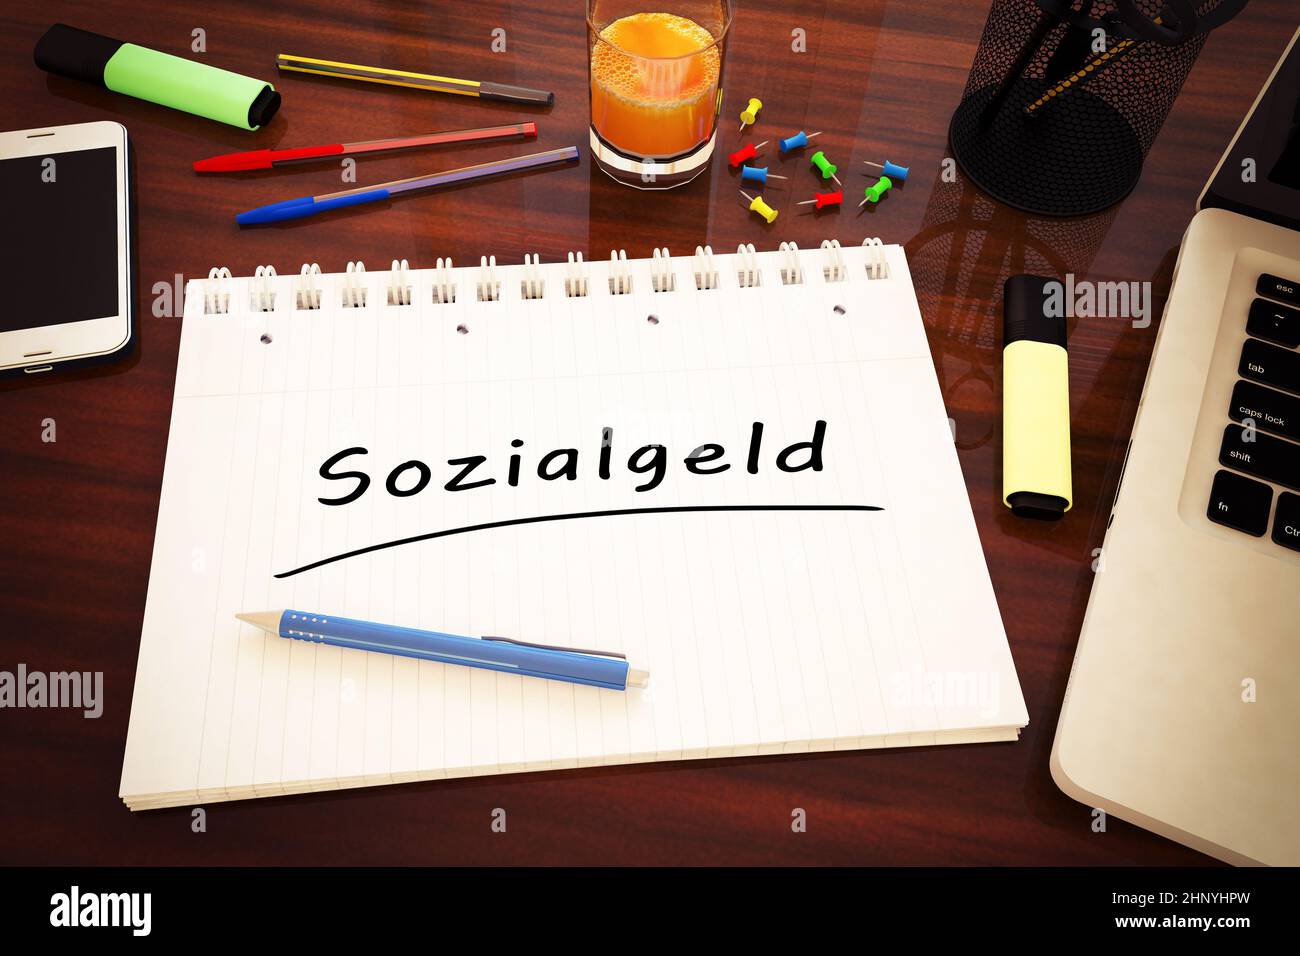 Sozialgeld - german word for social benefits or welfare benefits - handwritten text in a notebook on a desk - 3d render illustration. Stock Photo